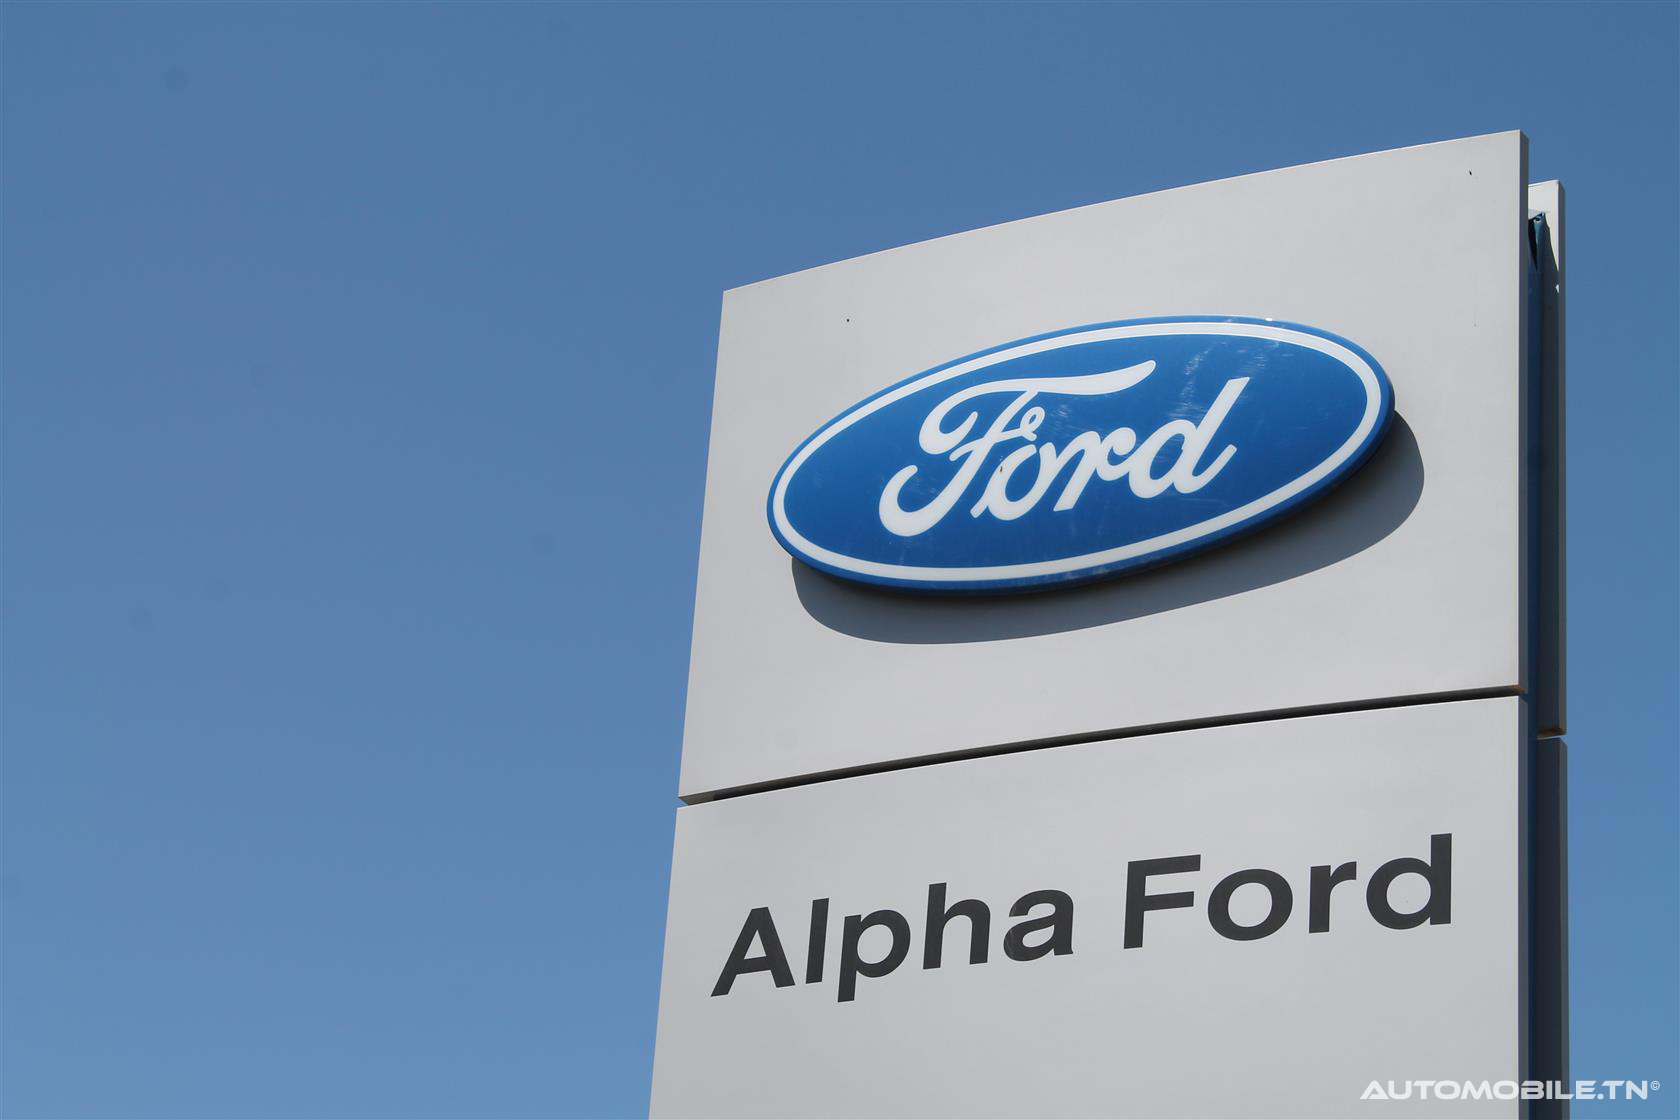 Cession d'Alpha Ford Tunisie : Le Consortium Ben Jemâa Motors, Salvador Caetano remporte l'appel d'offres